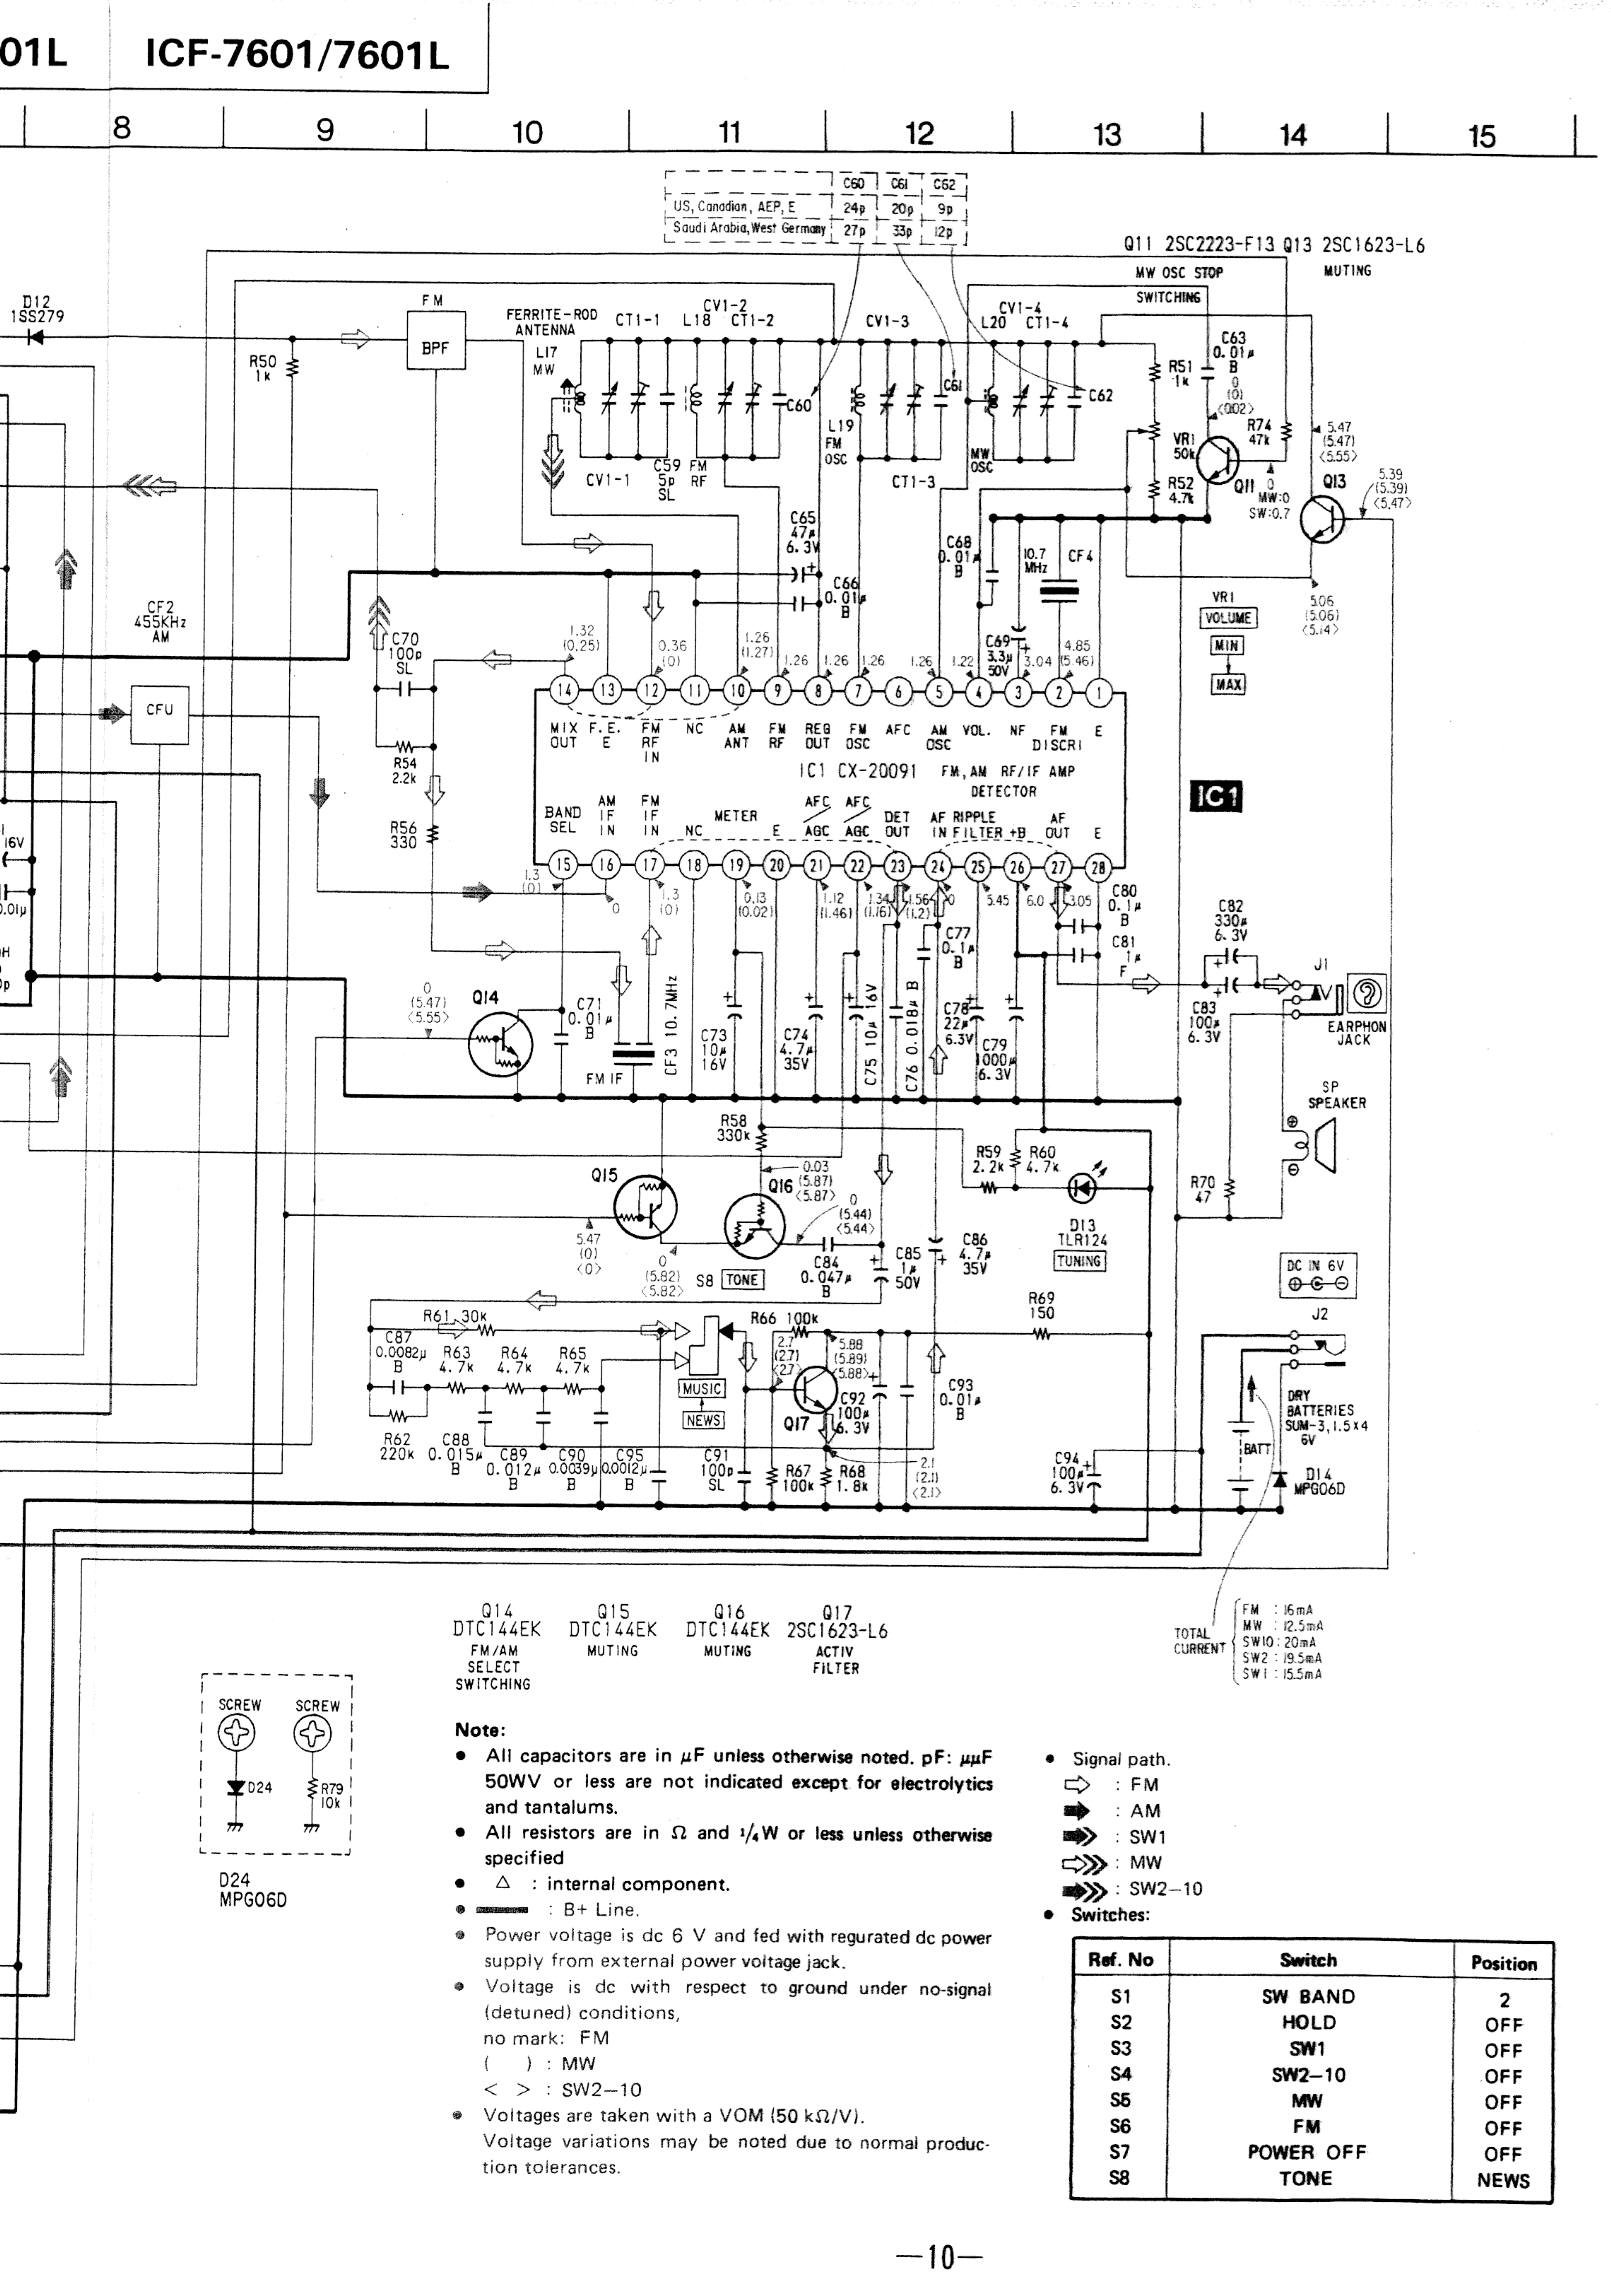 1998 Mitsubishi Eclipse Fuse Box Diagram - Wiring Diagram Schemas